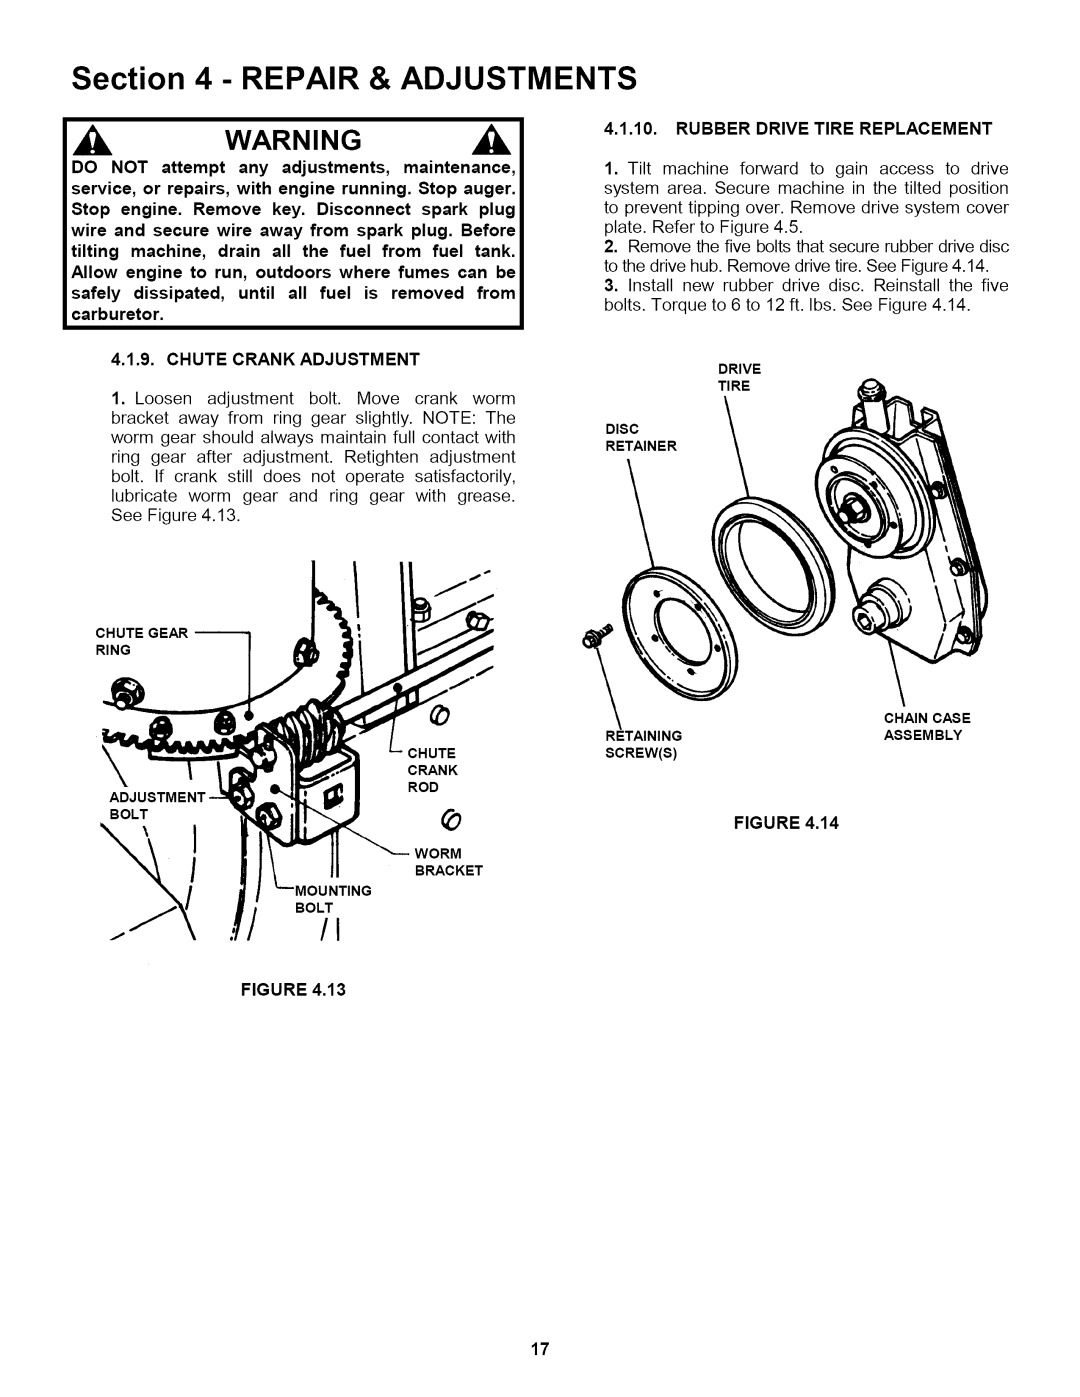 Snapper 155223 important safety instructions Repair & Adjustments, Chute Crank Adjustment 